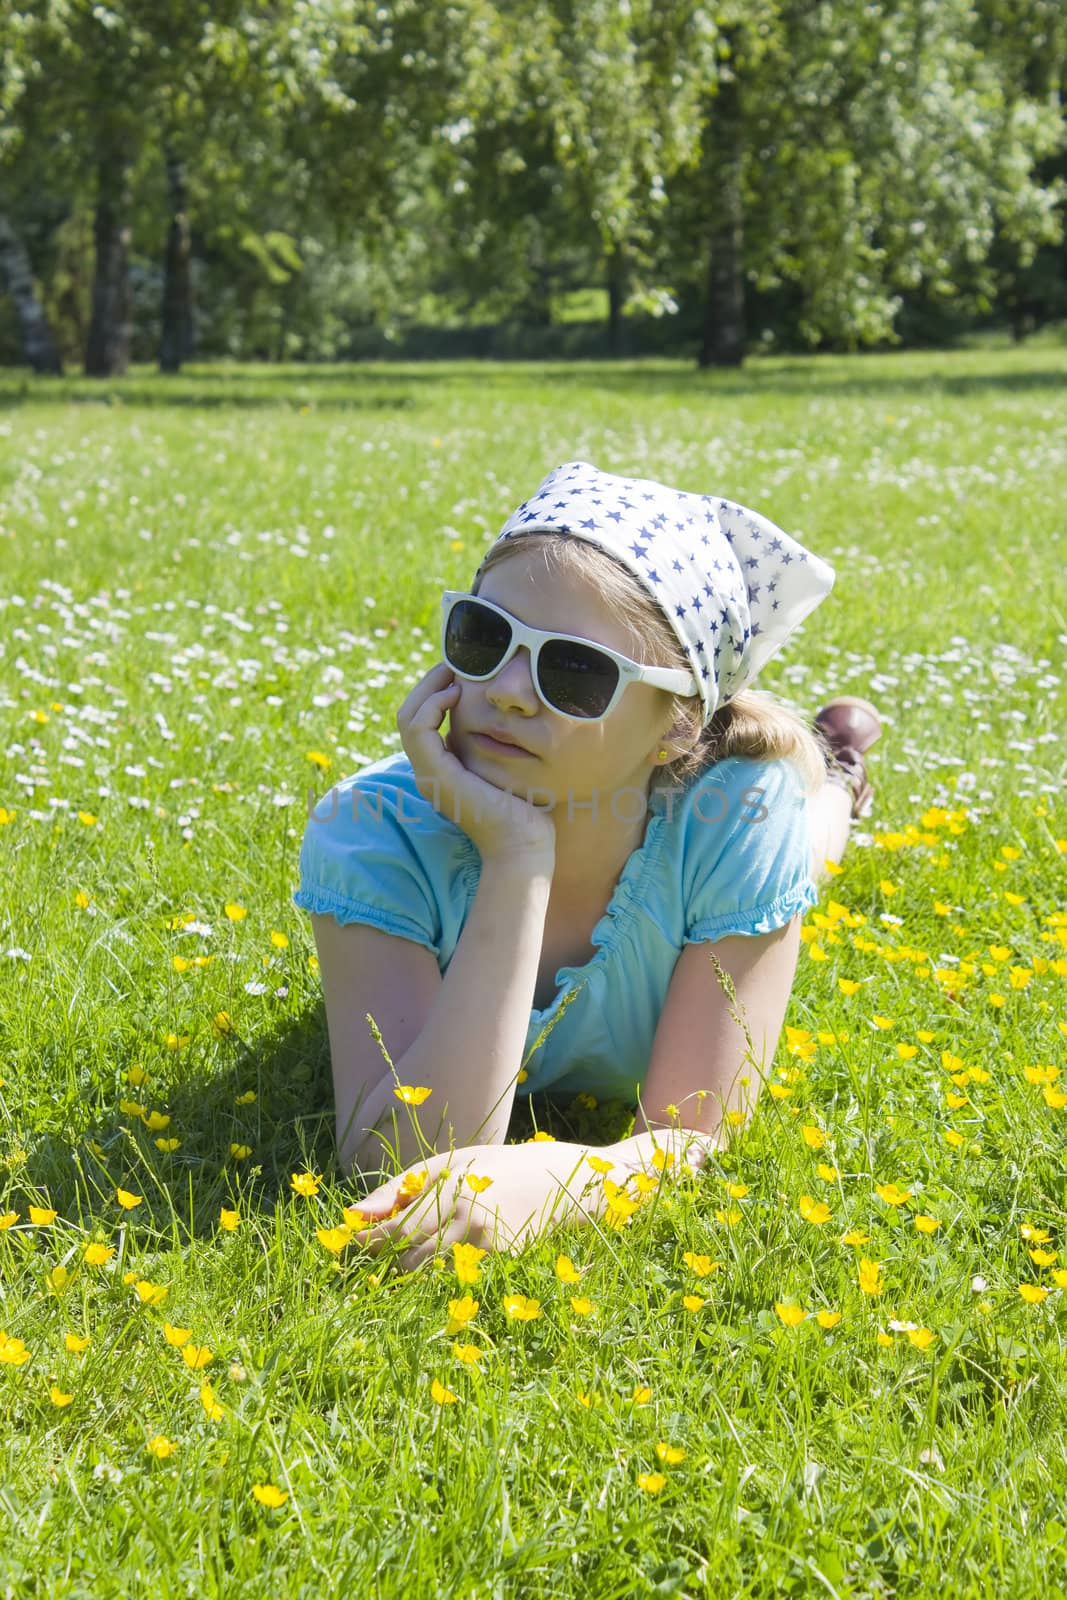 little girl lying on grass  by miradrozdowski